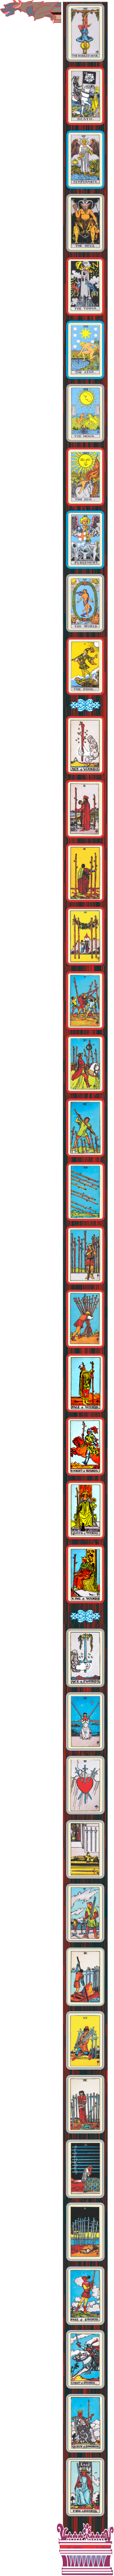 graphiic-right gargoyle and tarot cards column